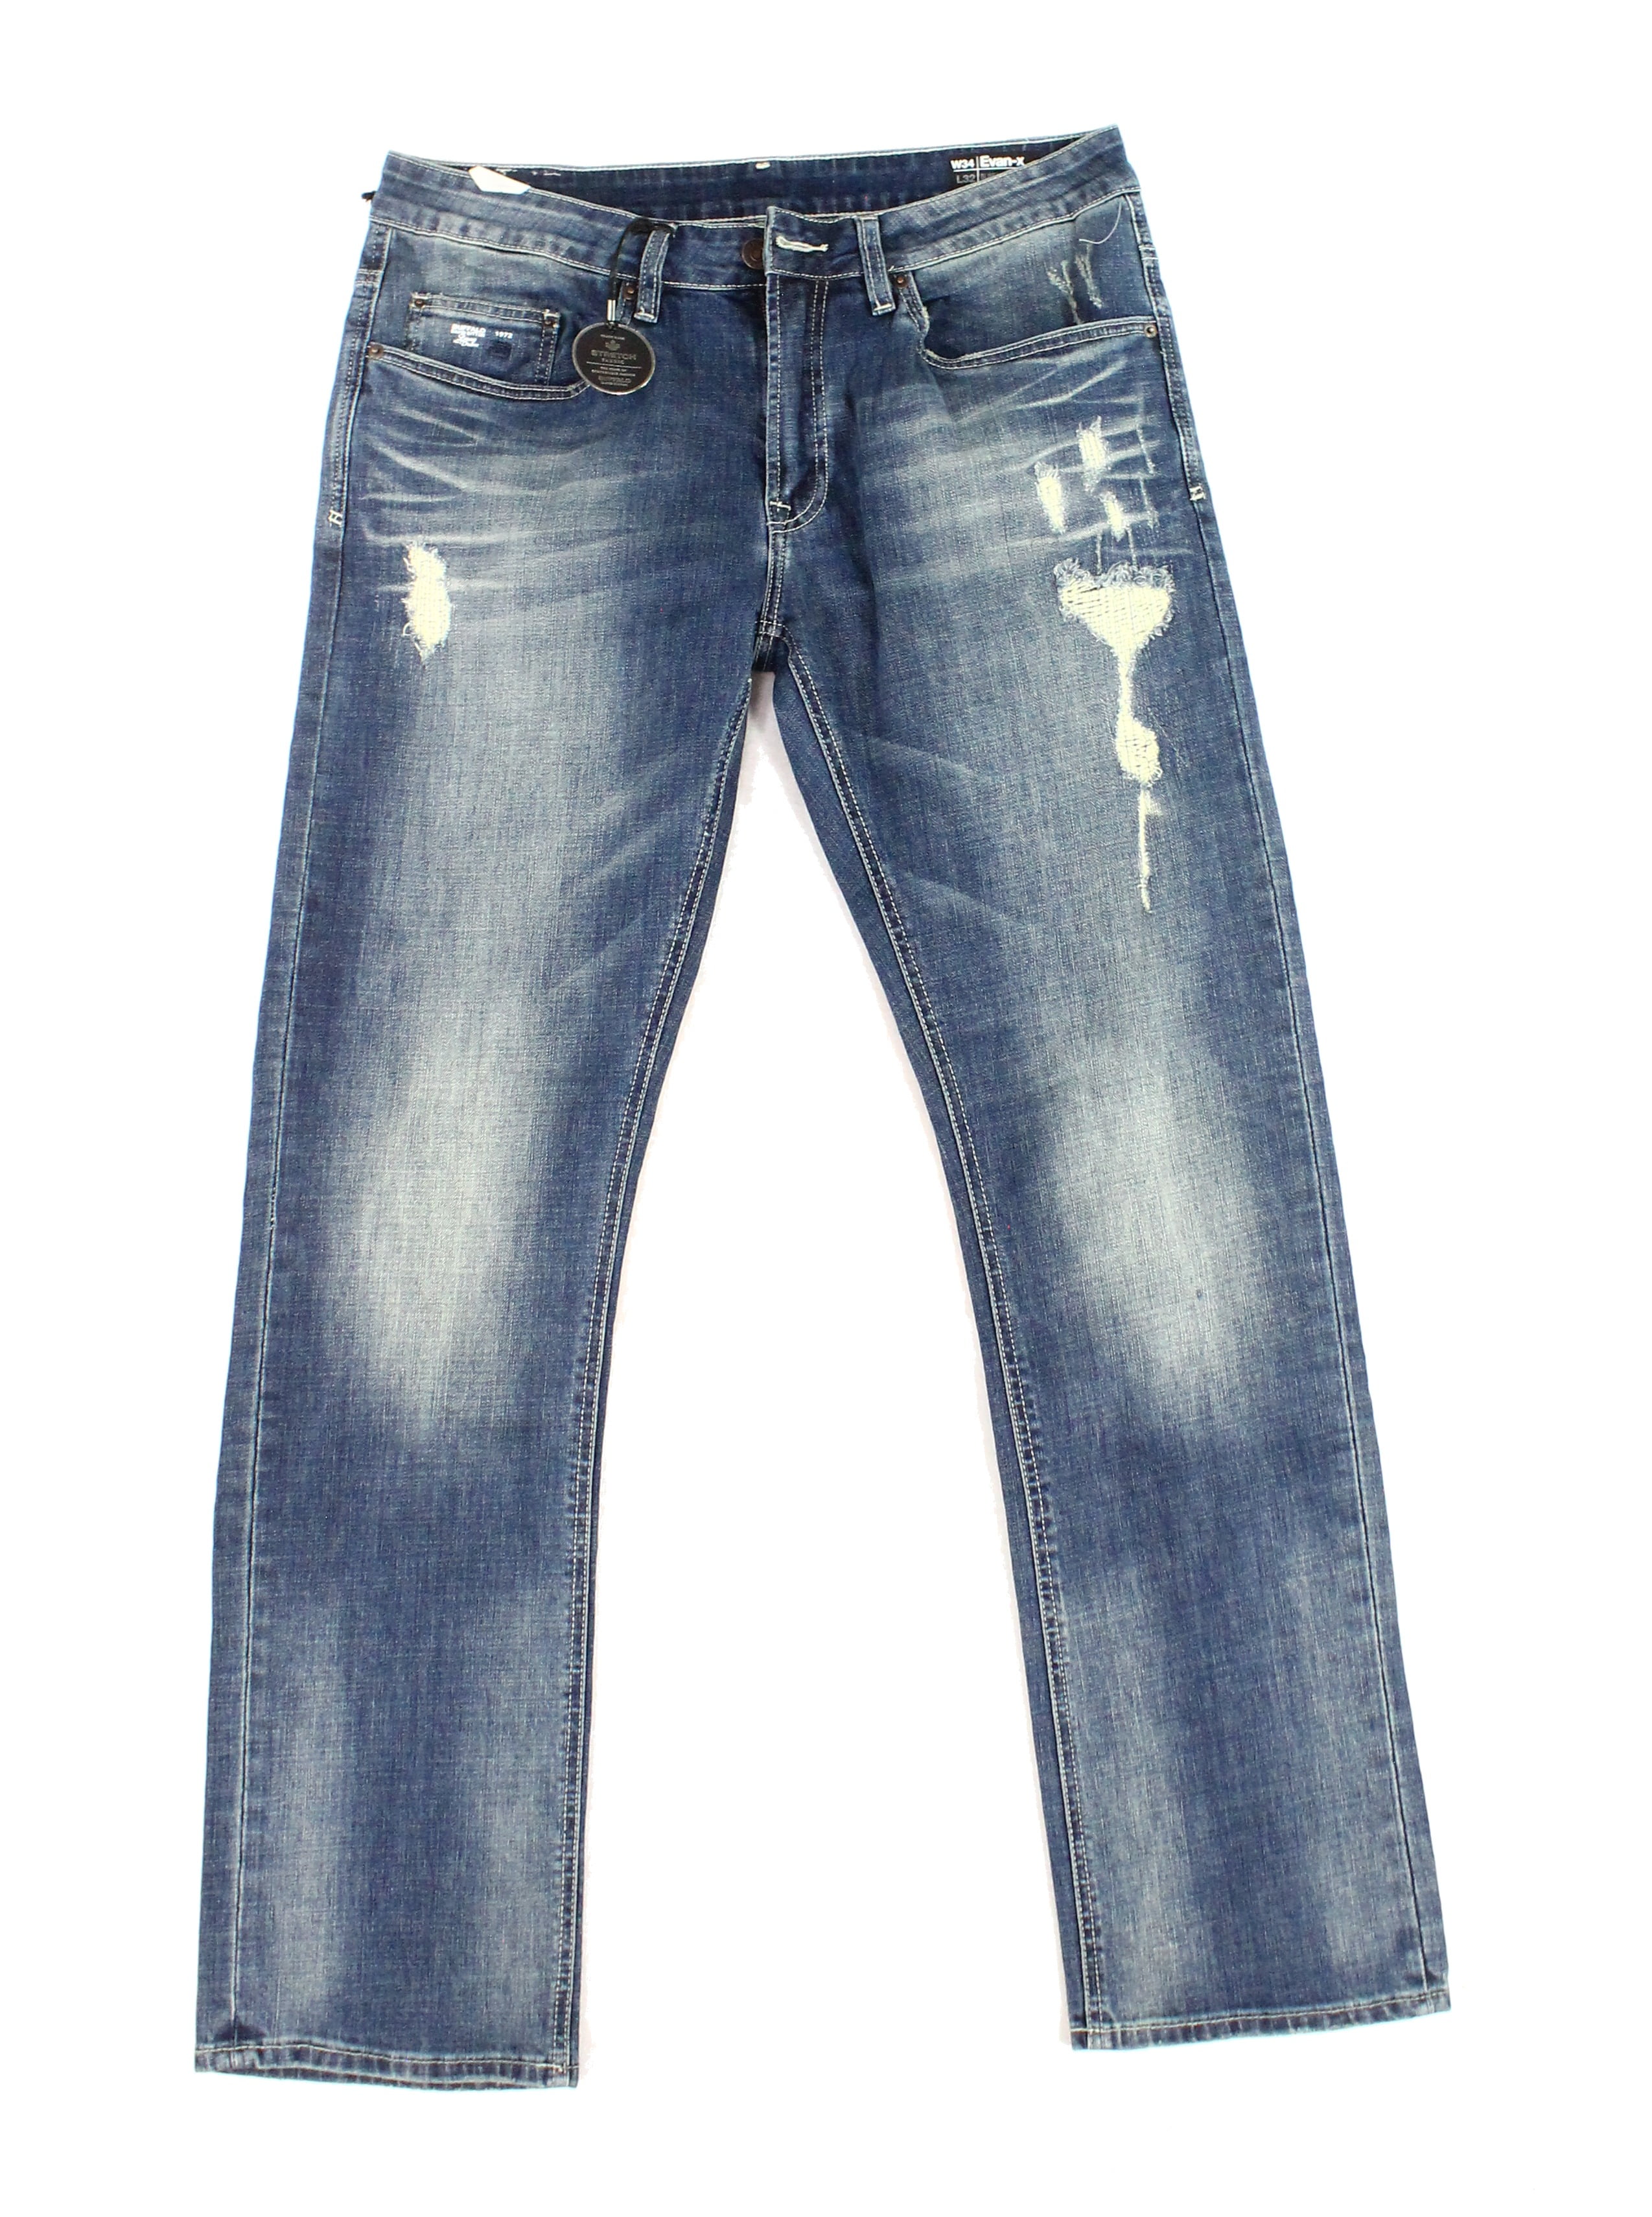 Buffalo Jeans - Mens 34x32 Slim Straight Denim Jeans 34 - Walmart.com ...